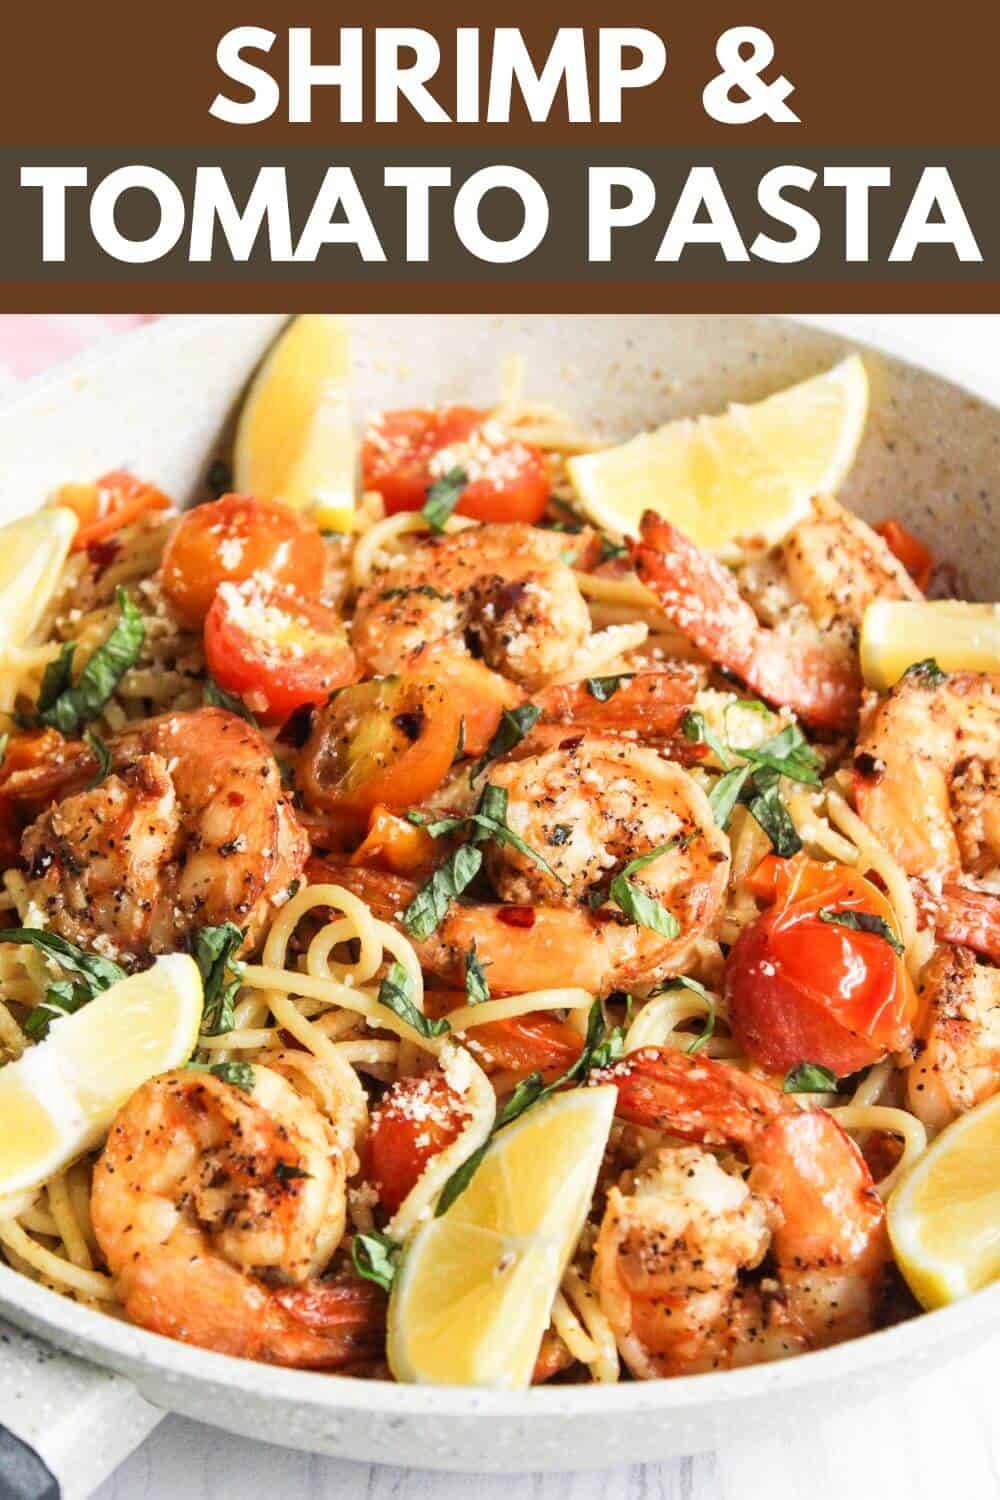 Shrimp and tomato pasta.